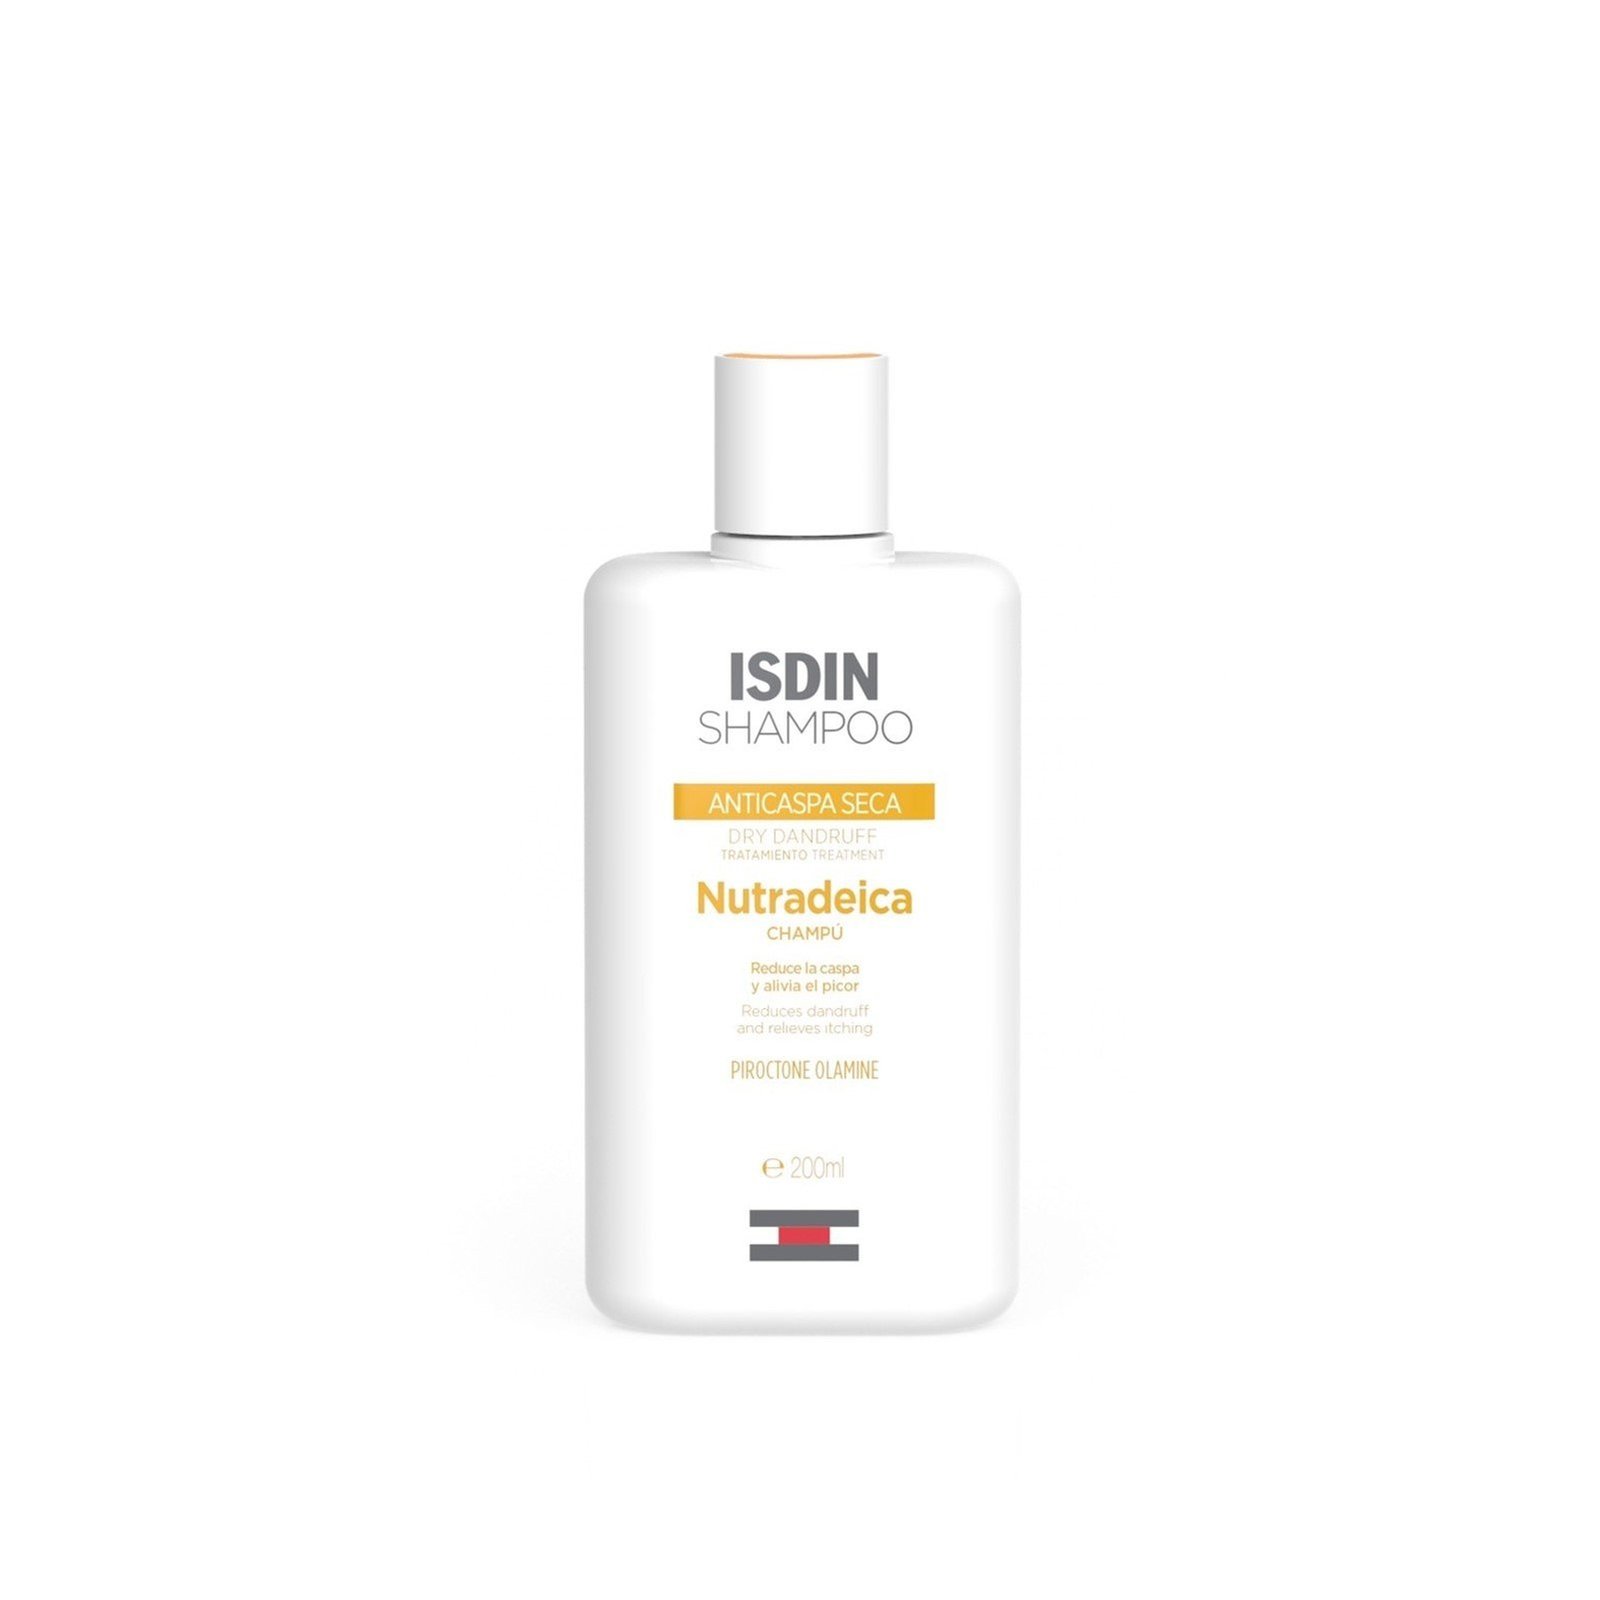 ISDIN Nutradeica Dry Dandruff Shampoo 200ml (6.76fl oz)